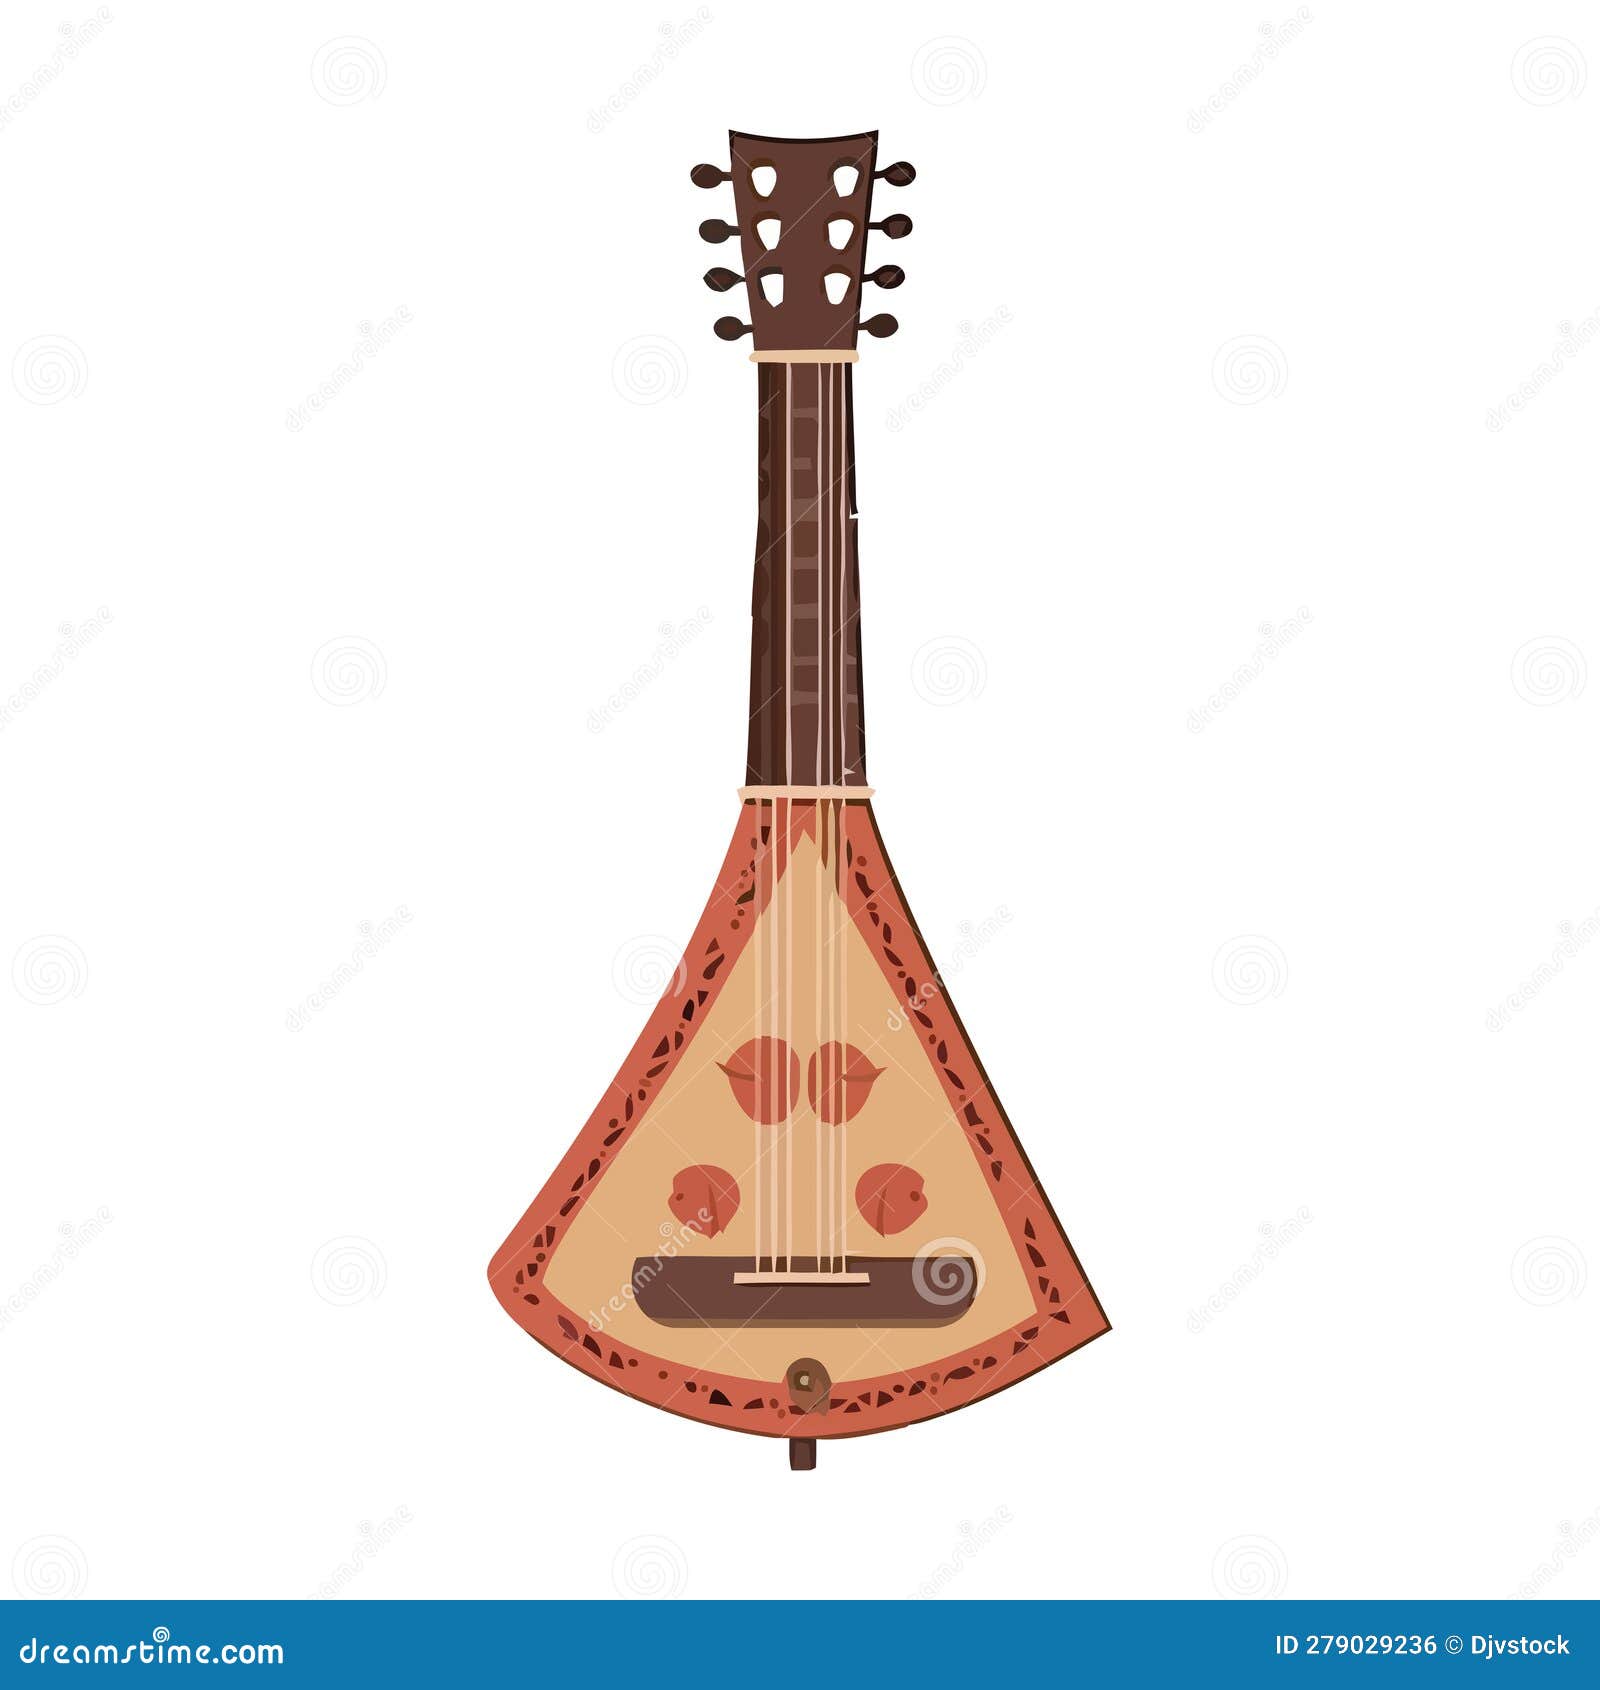 balalaika, traditional musical instrument